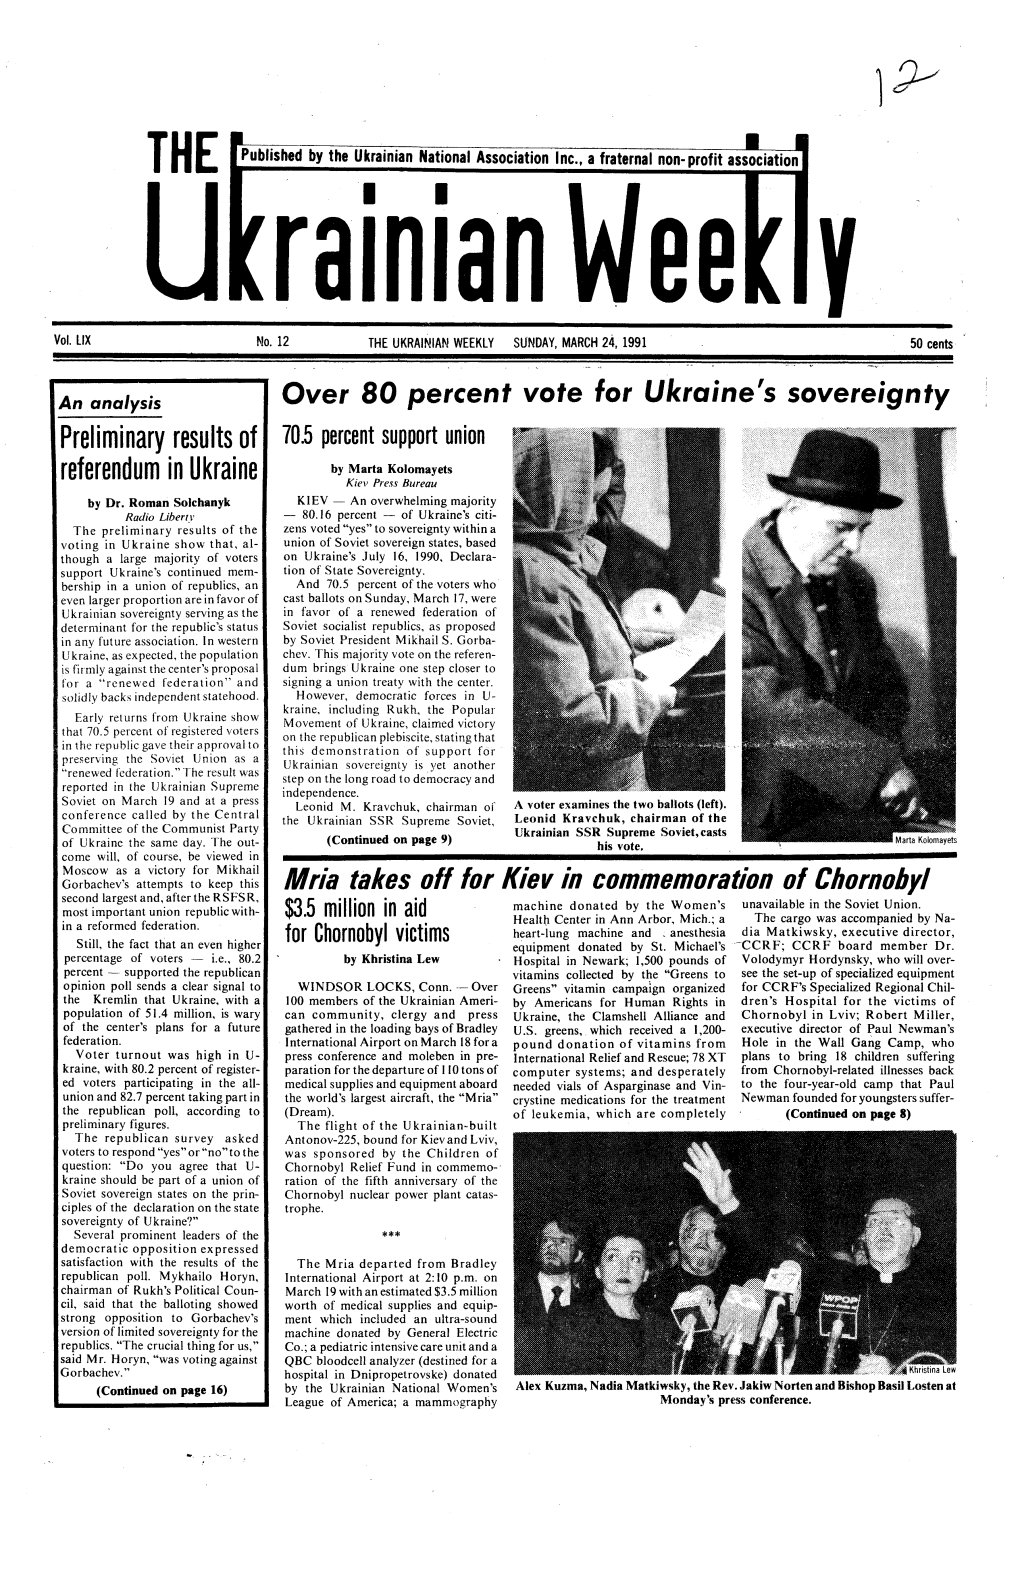 The Ukrainian Weekly 1991, No.12